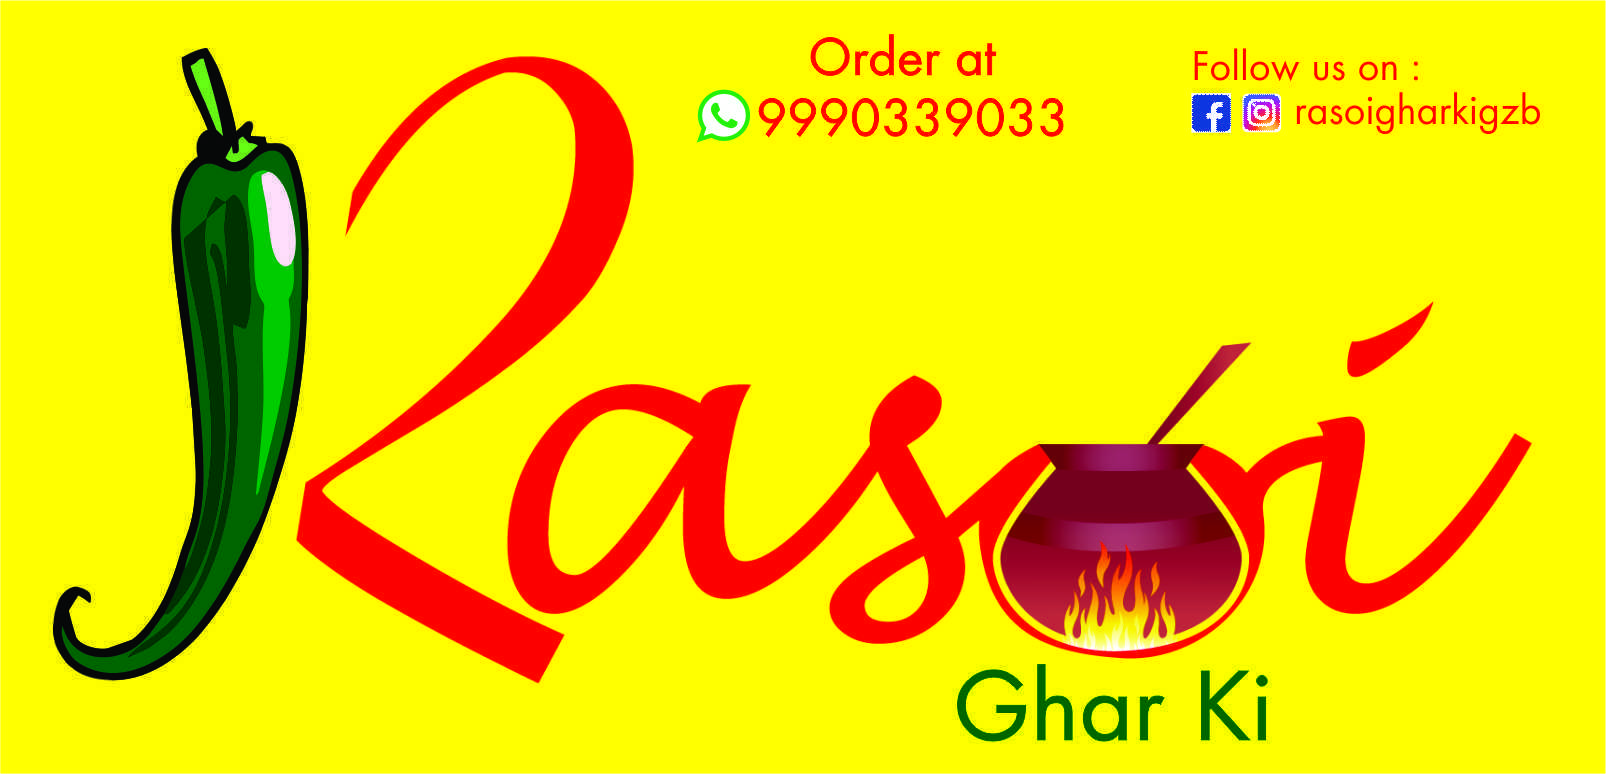 Rasoi Ghar Ki | Takeaway Restaurant In Kavi Nagar Ghaziabad